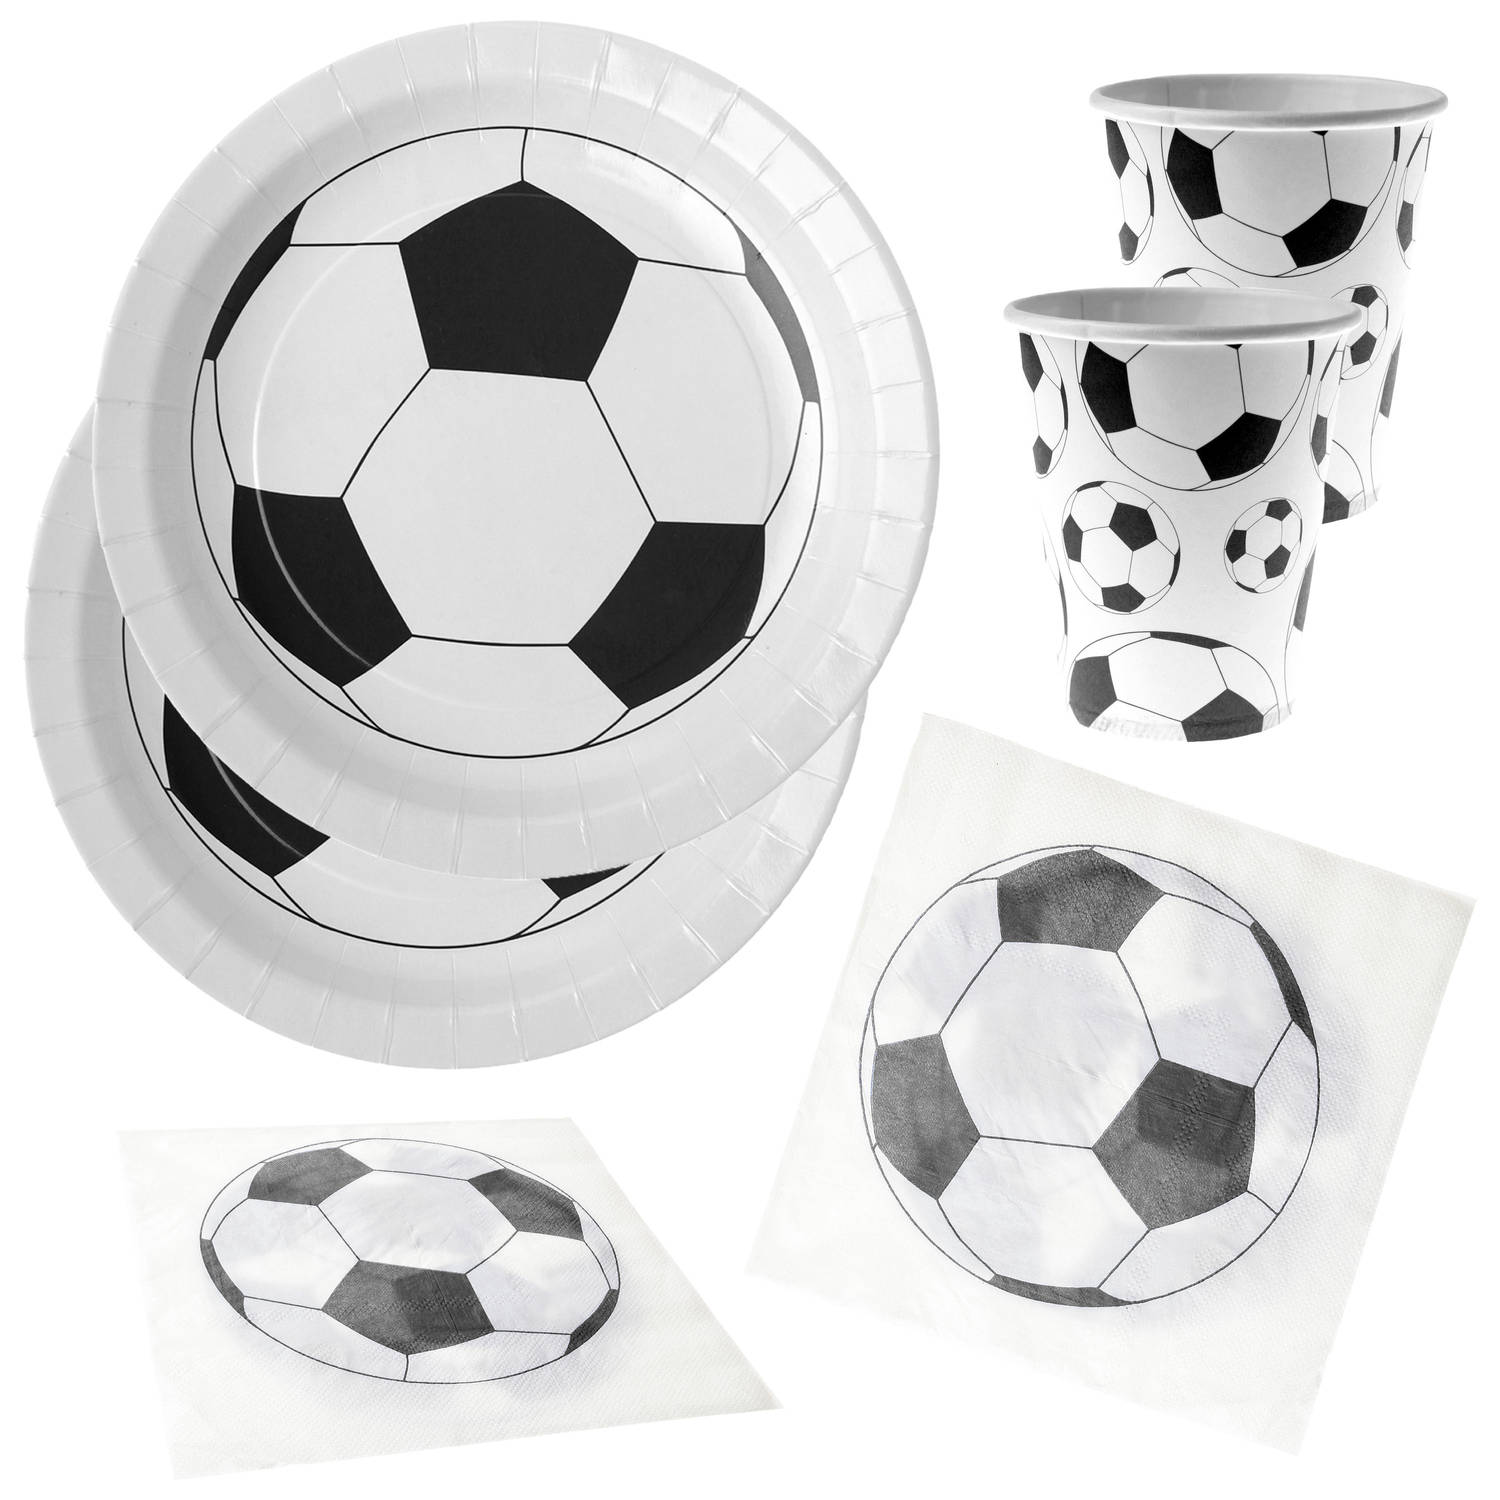 Voetbal thema feest wegwerp servies set 10x bordjes-10x bekers-20x servetten wit-zwart Feestpakkette